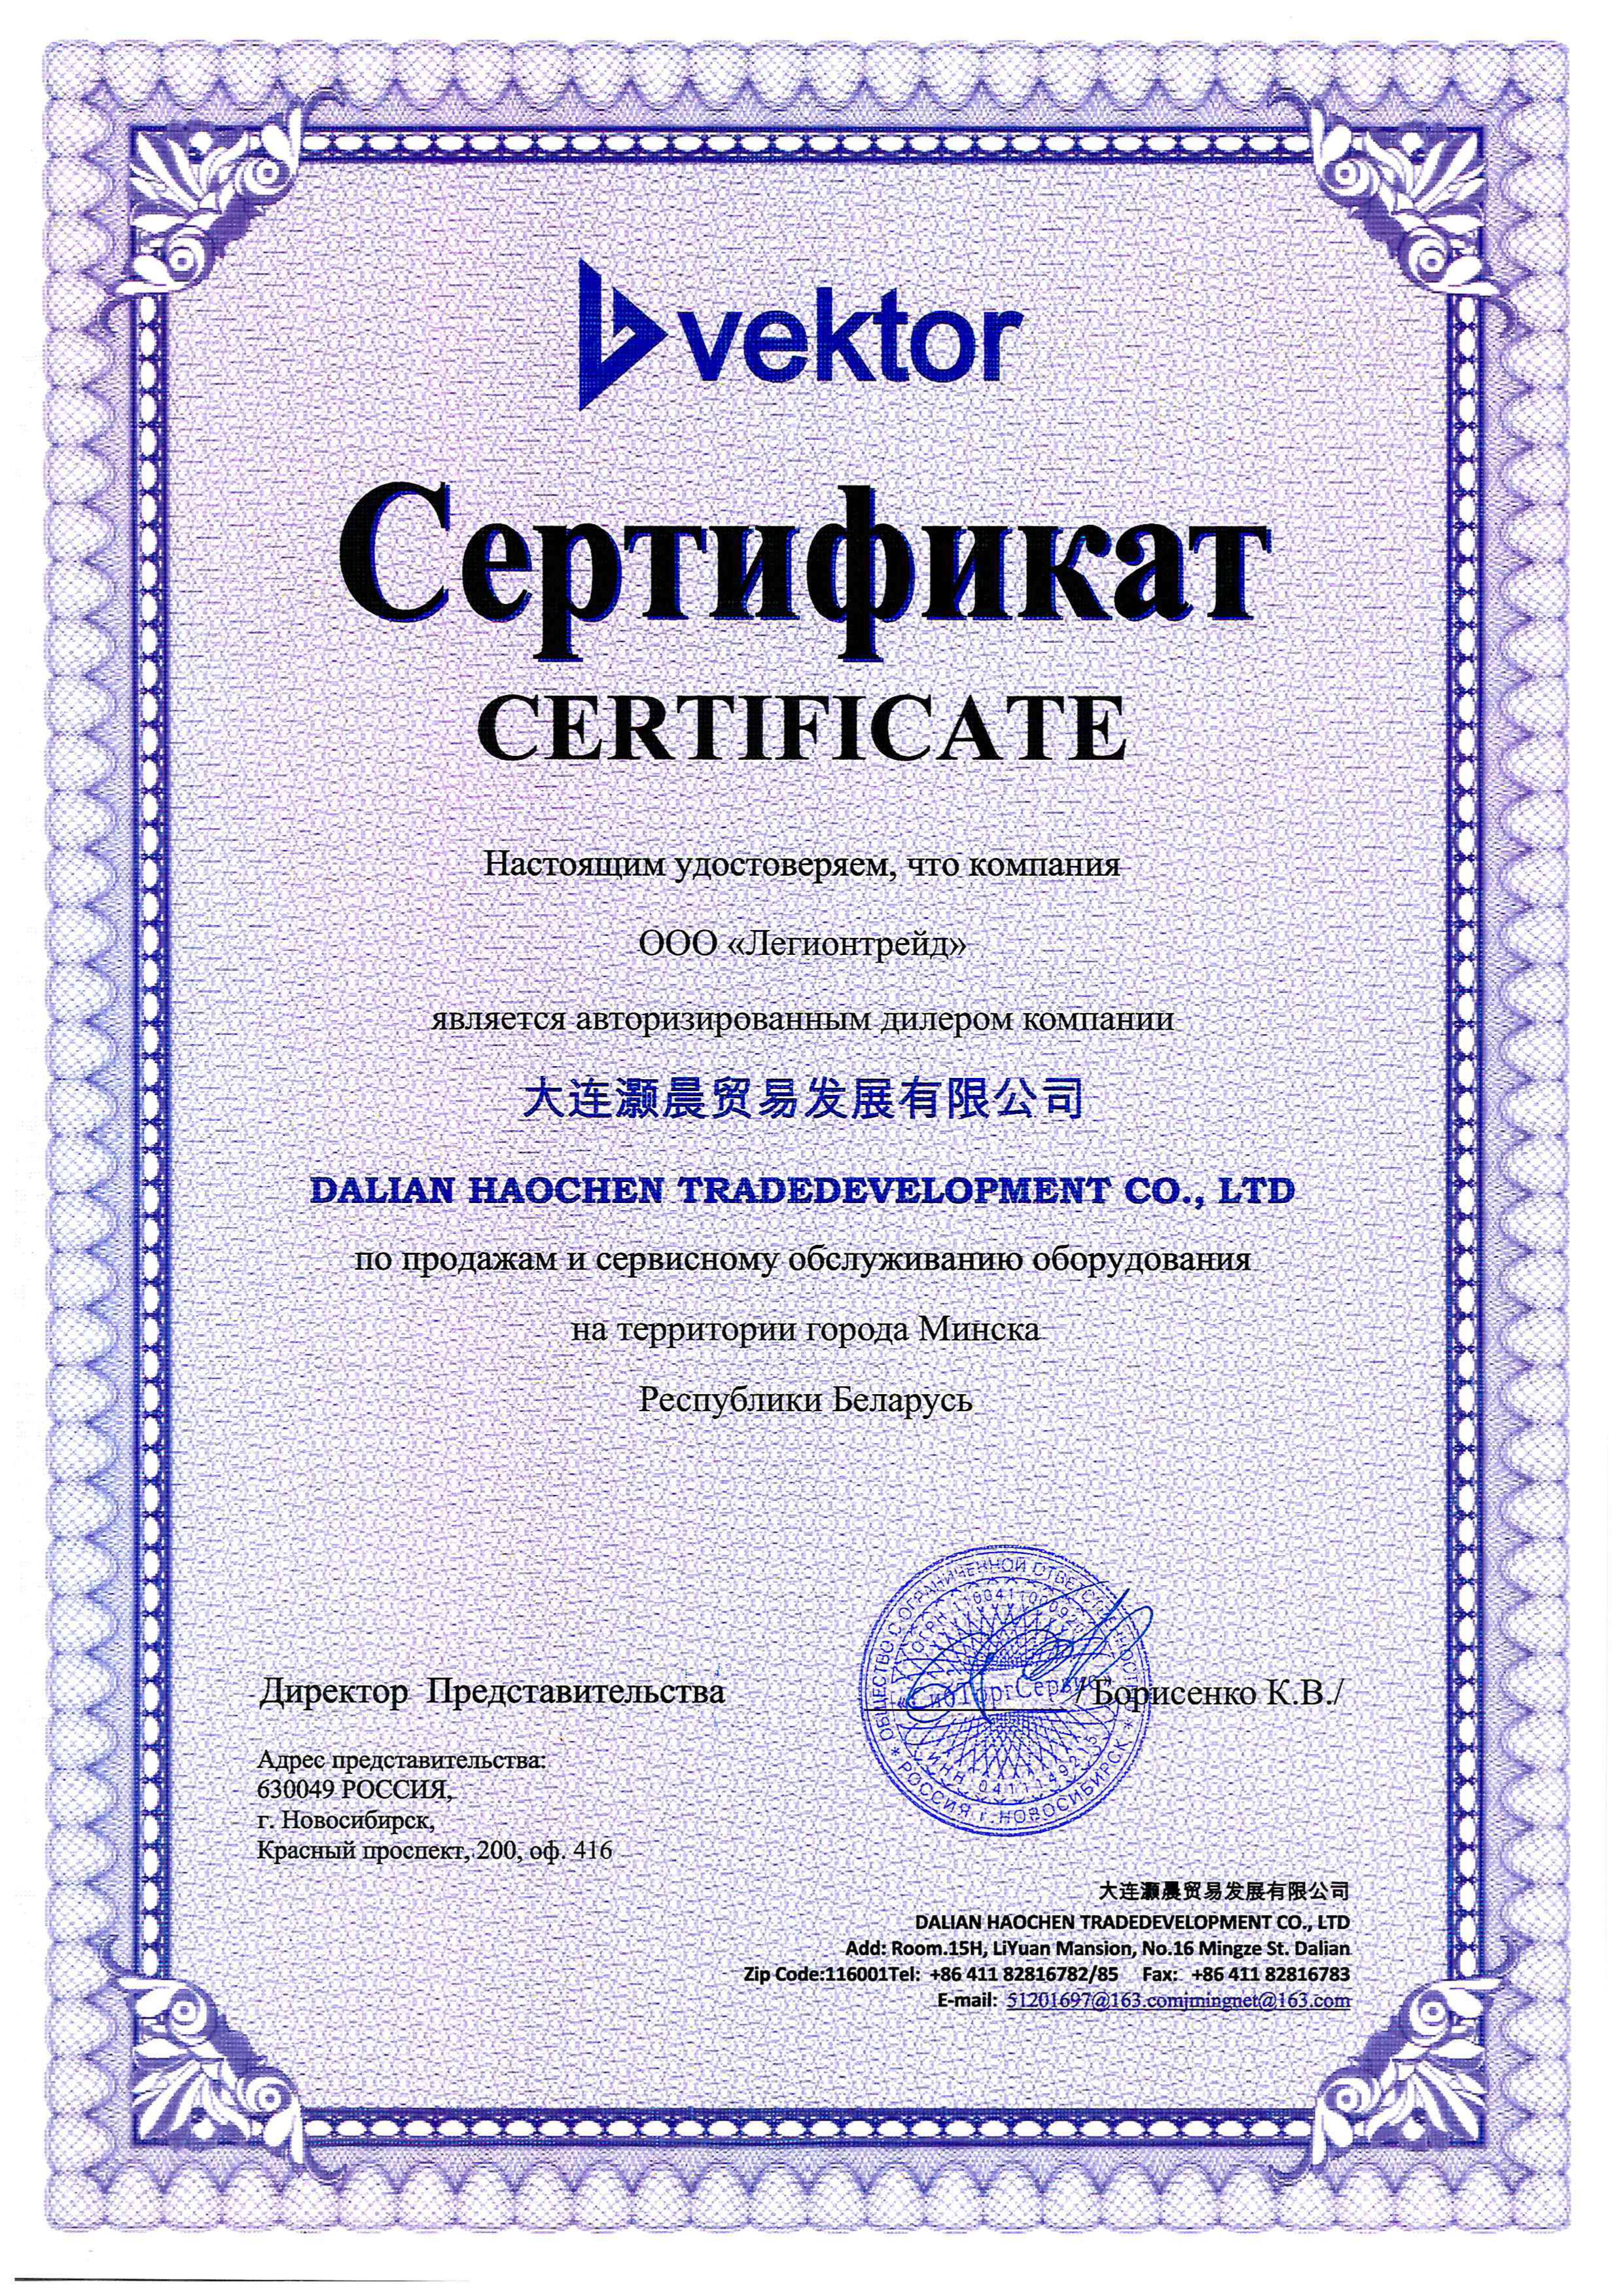 Дилерский сертификат Vektor